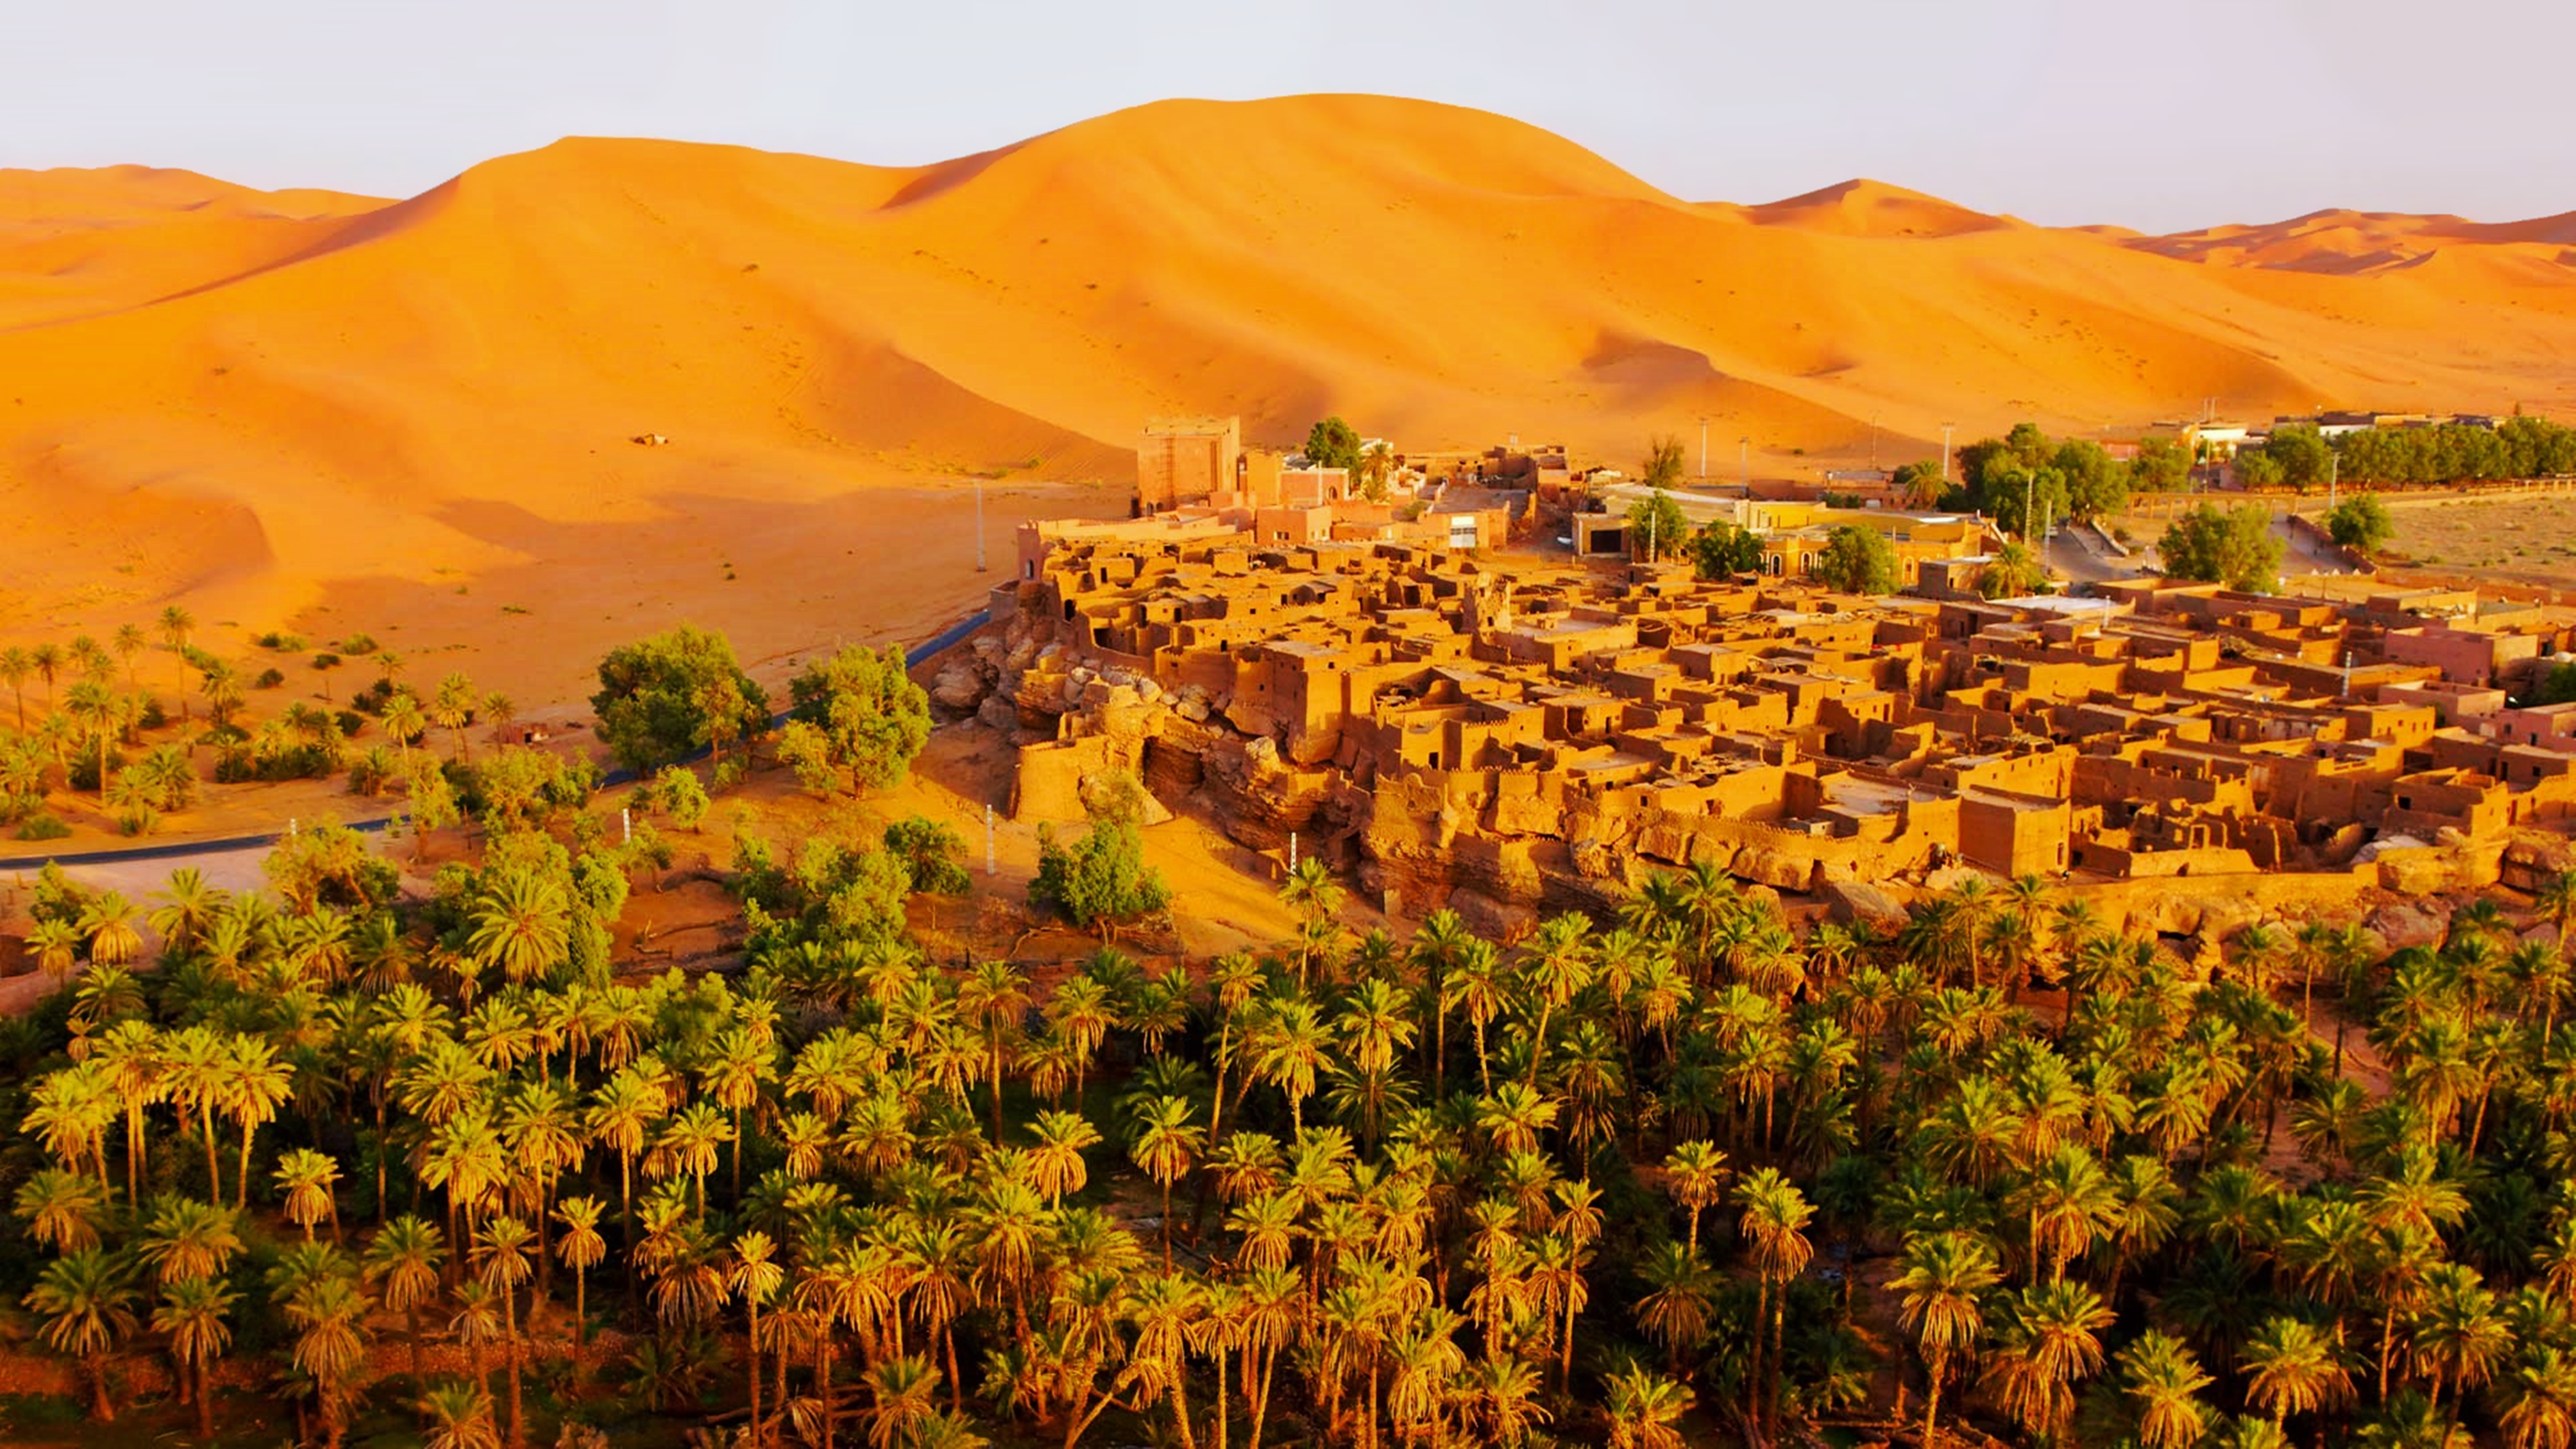 sahara, man made, village, africa, algeria, desert, dune, oasis, palm tree, sand, taghit Desktop home screen Wallpaper